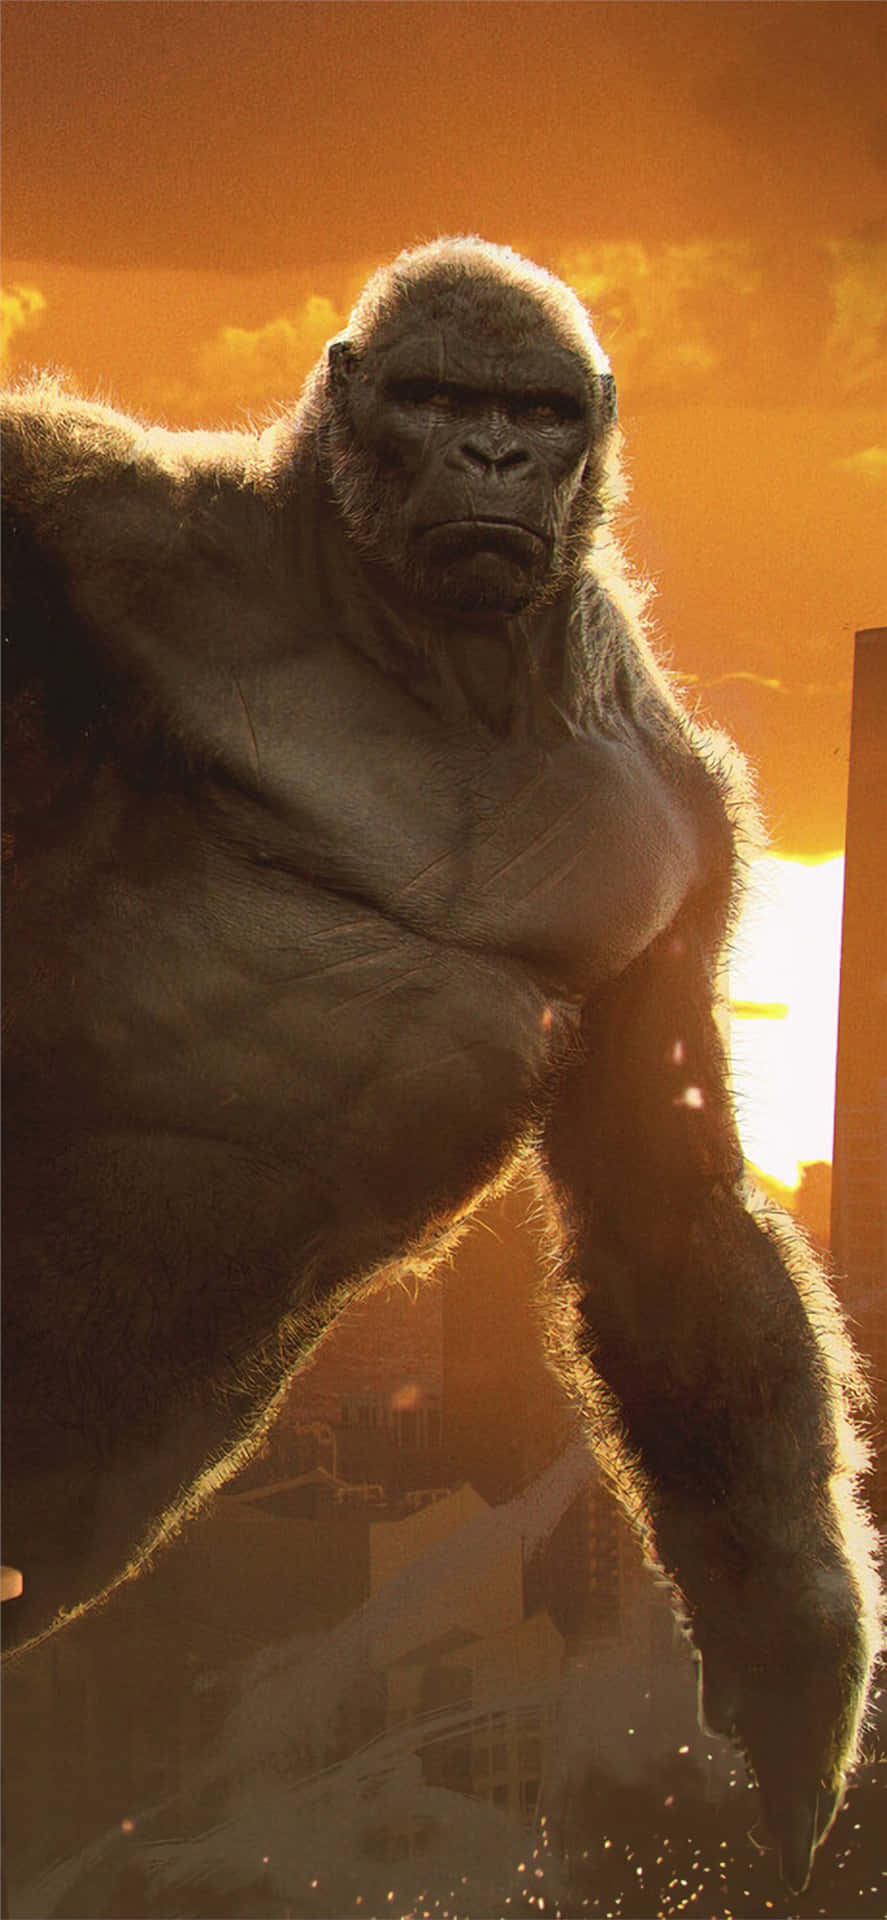 Iphonexs Max Gorilla Bakgrundsfilm King Kong.